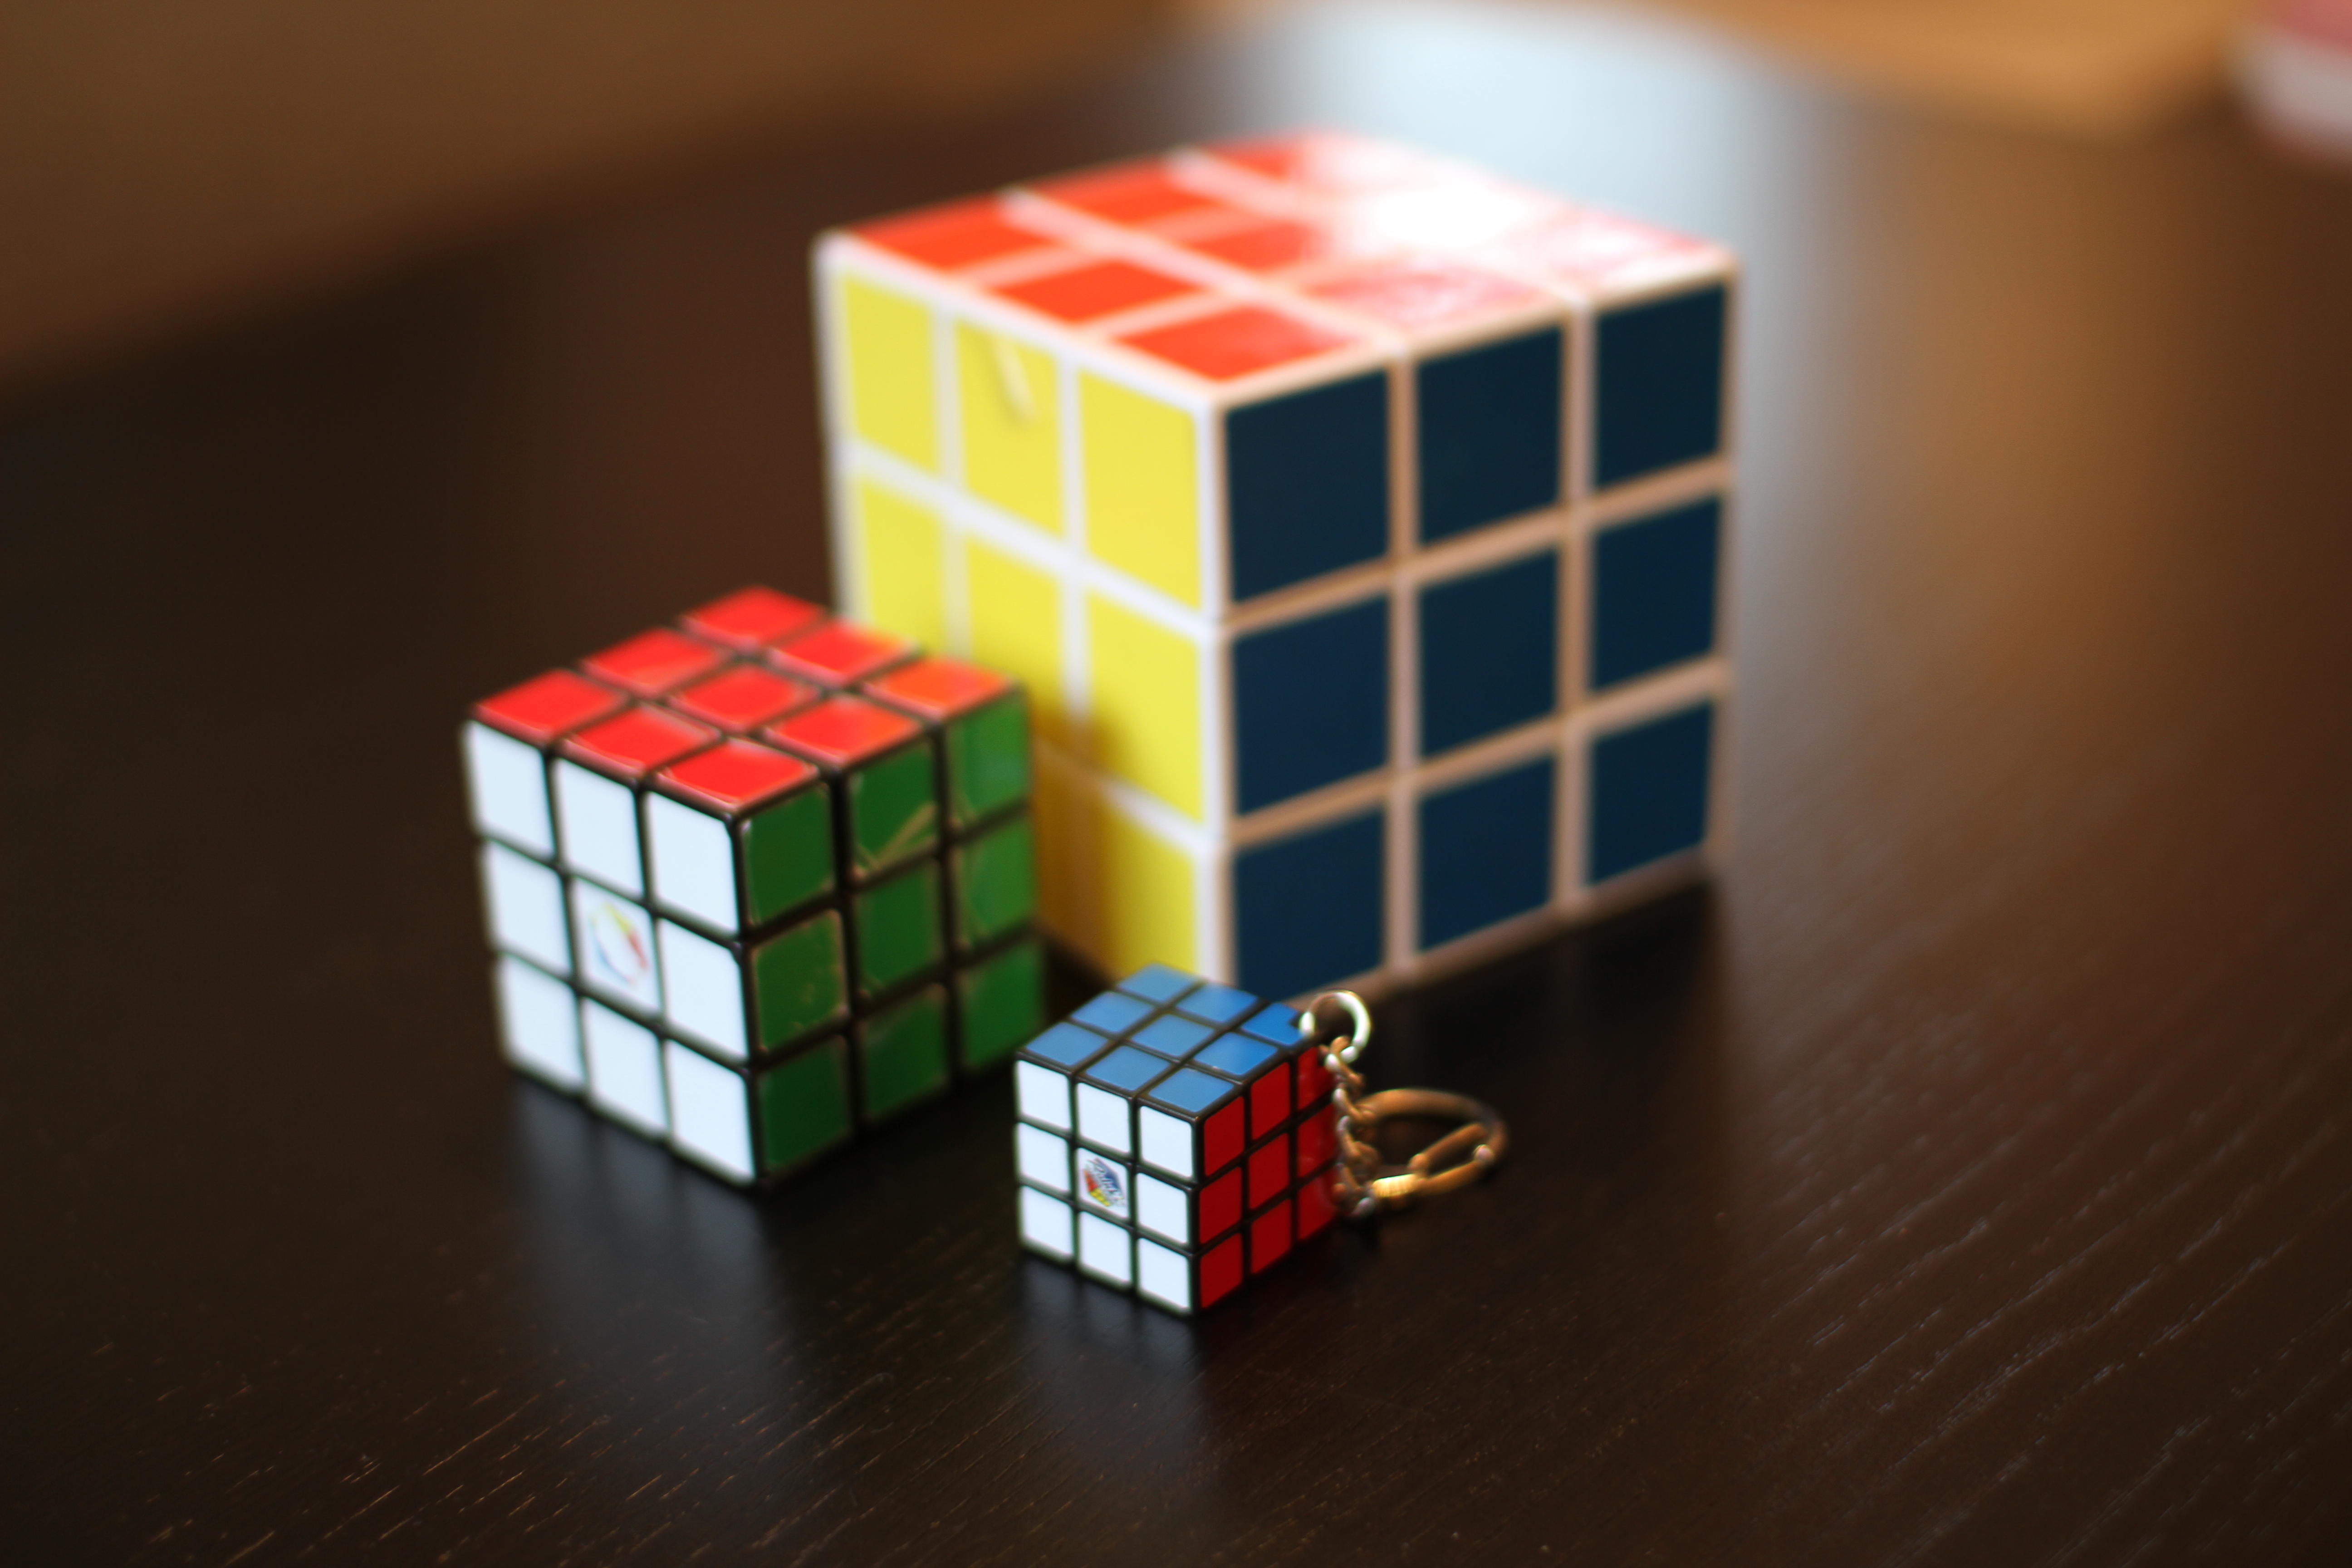 how to make a rubix cube